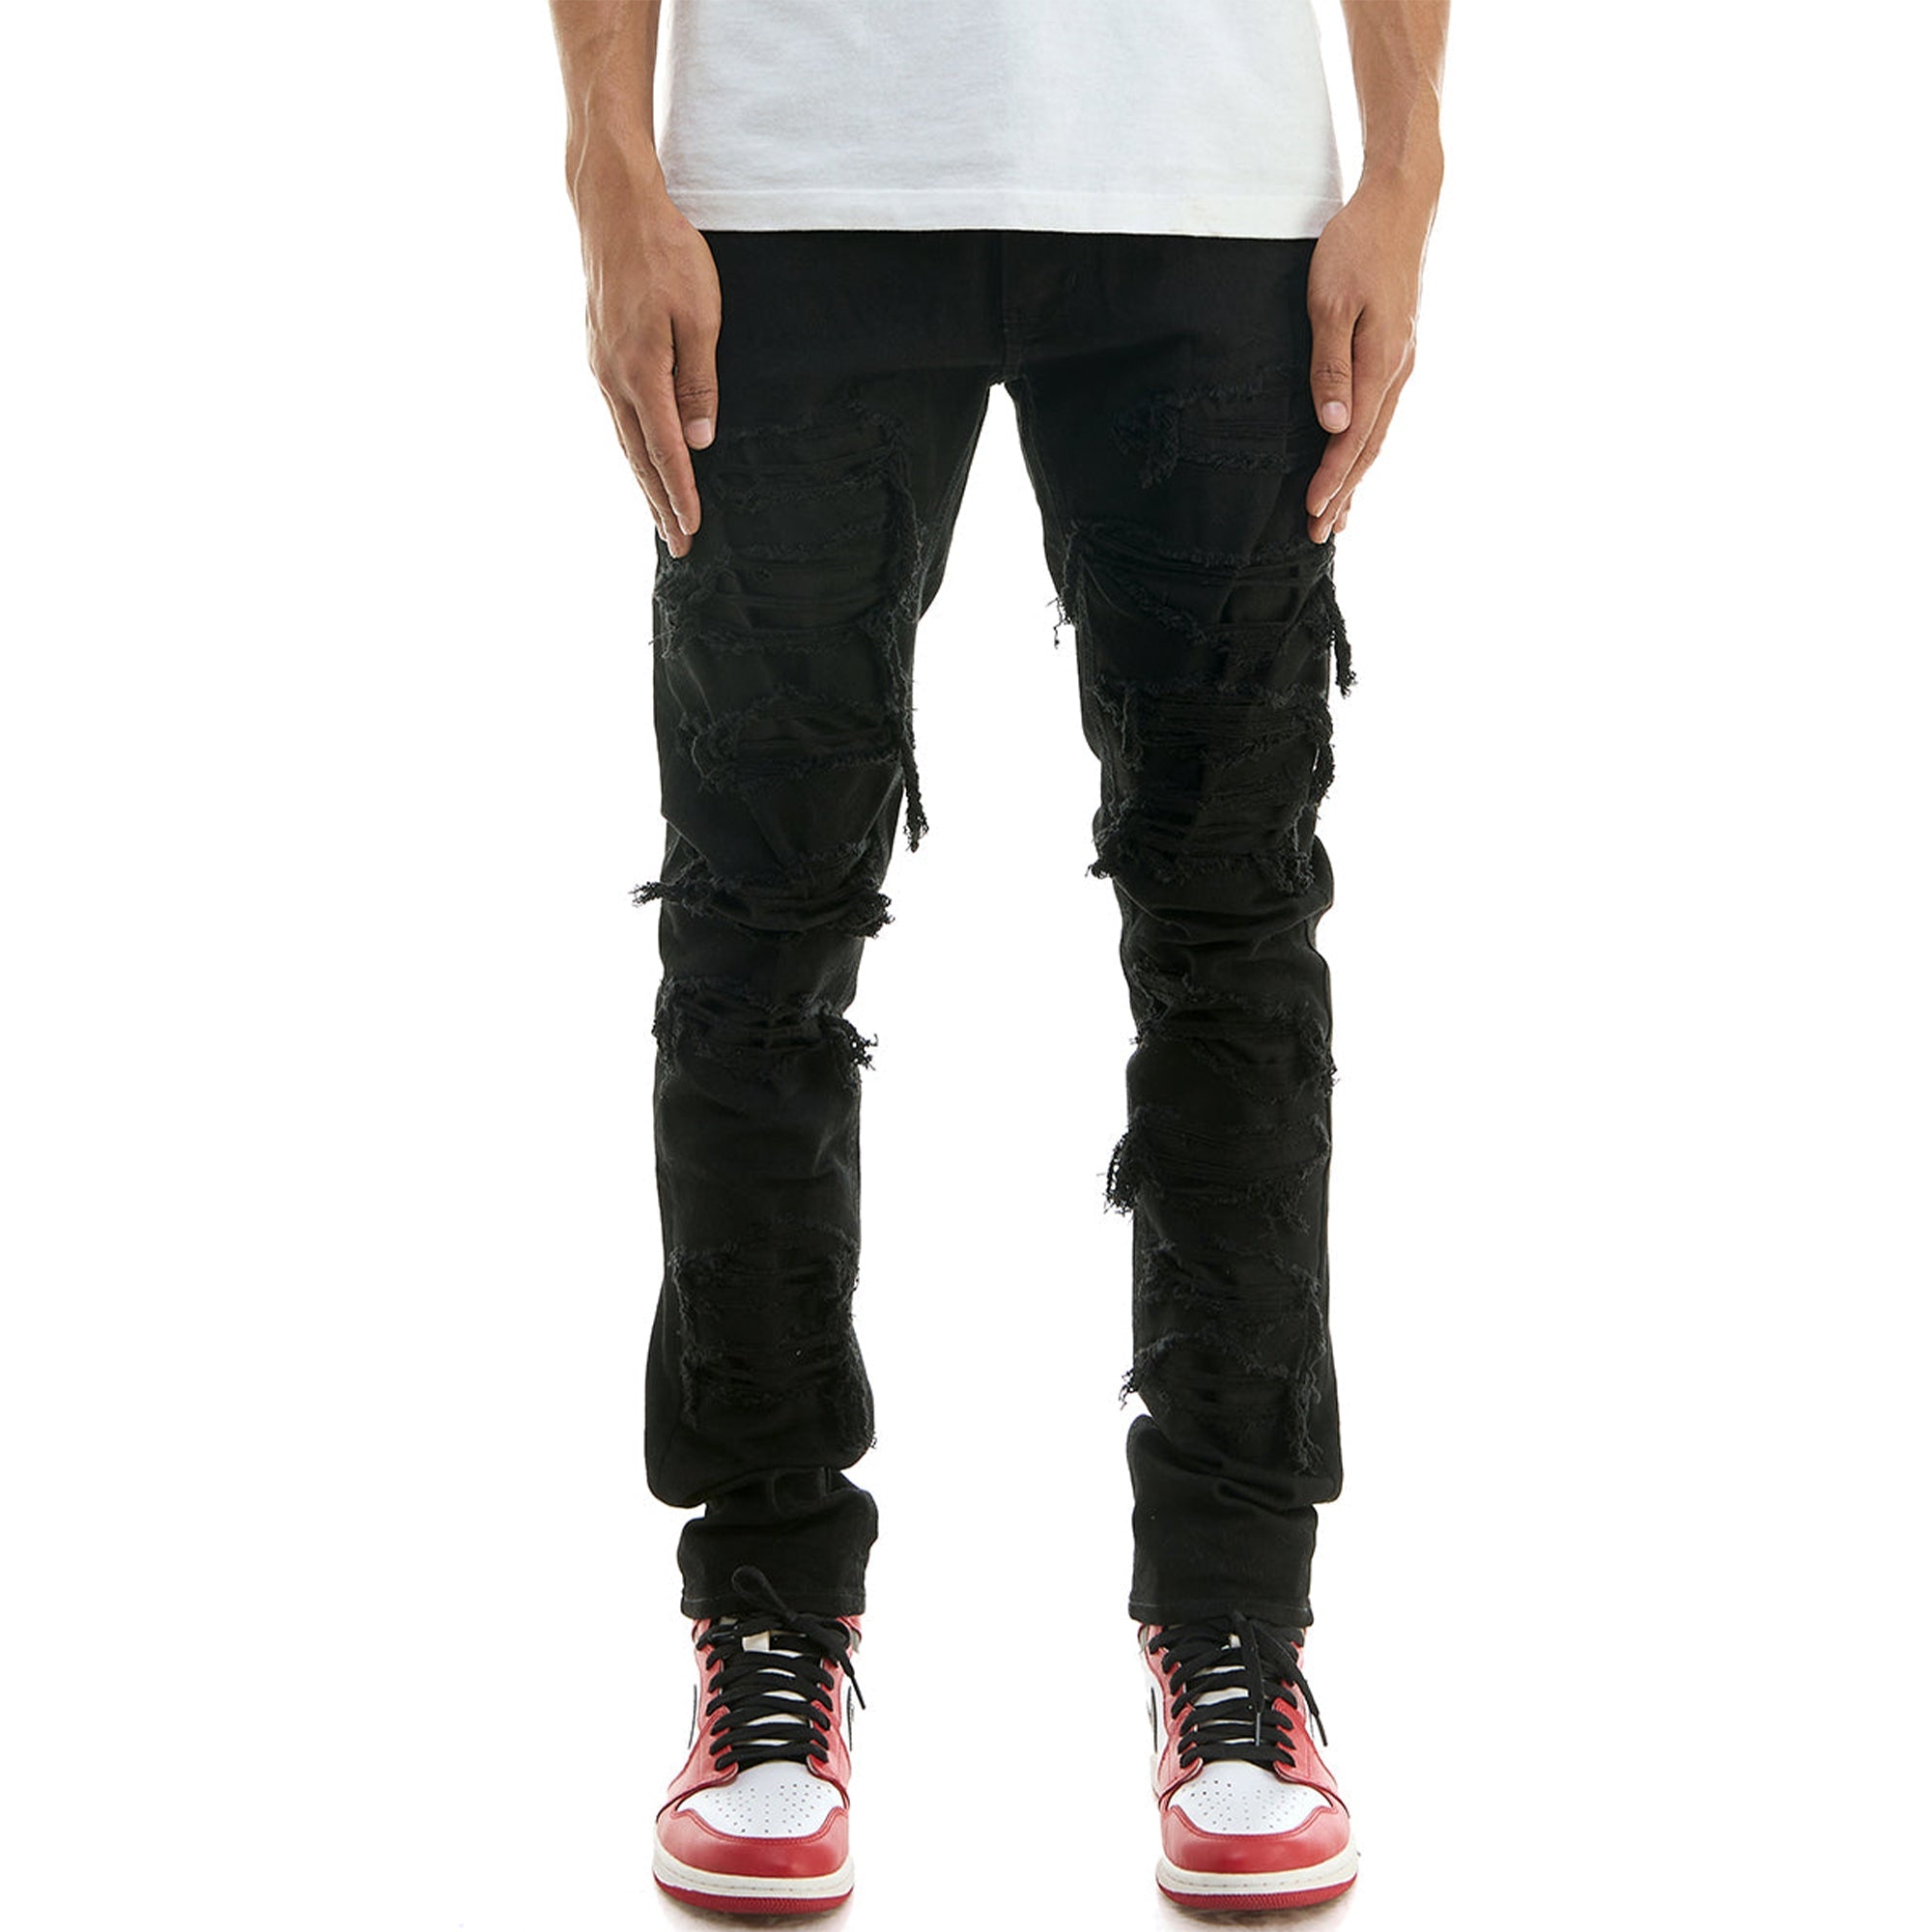 KDNK Men Under Patched More Skinny Jeans (Black)-Black-28W X 32L-Nexus Clothing